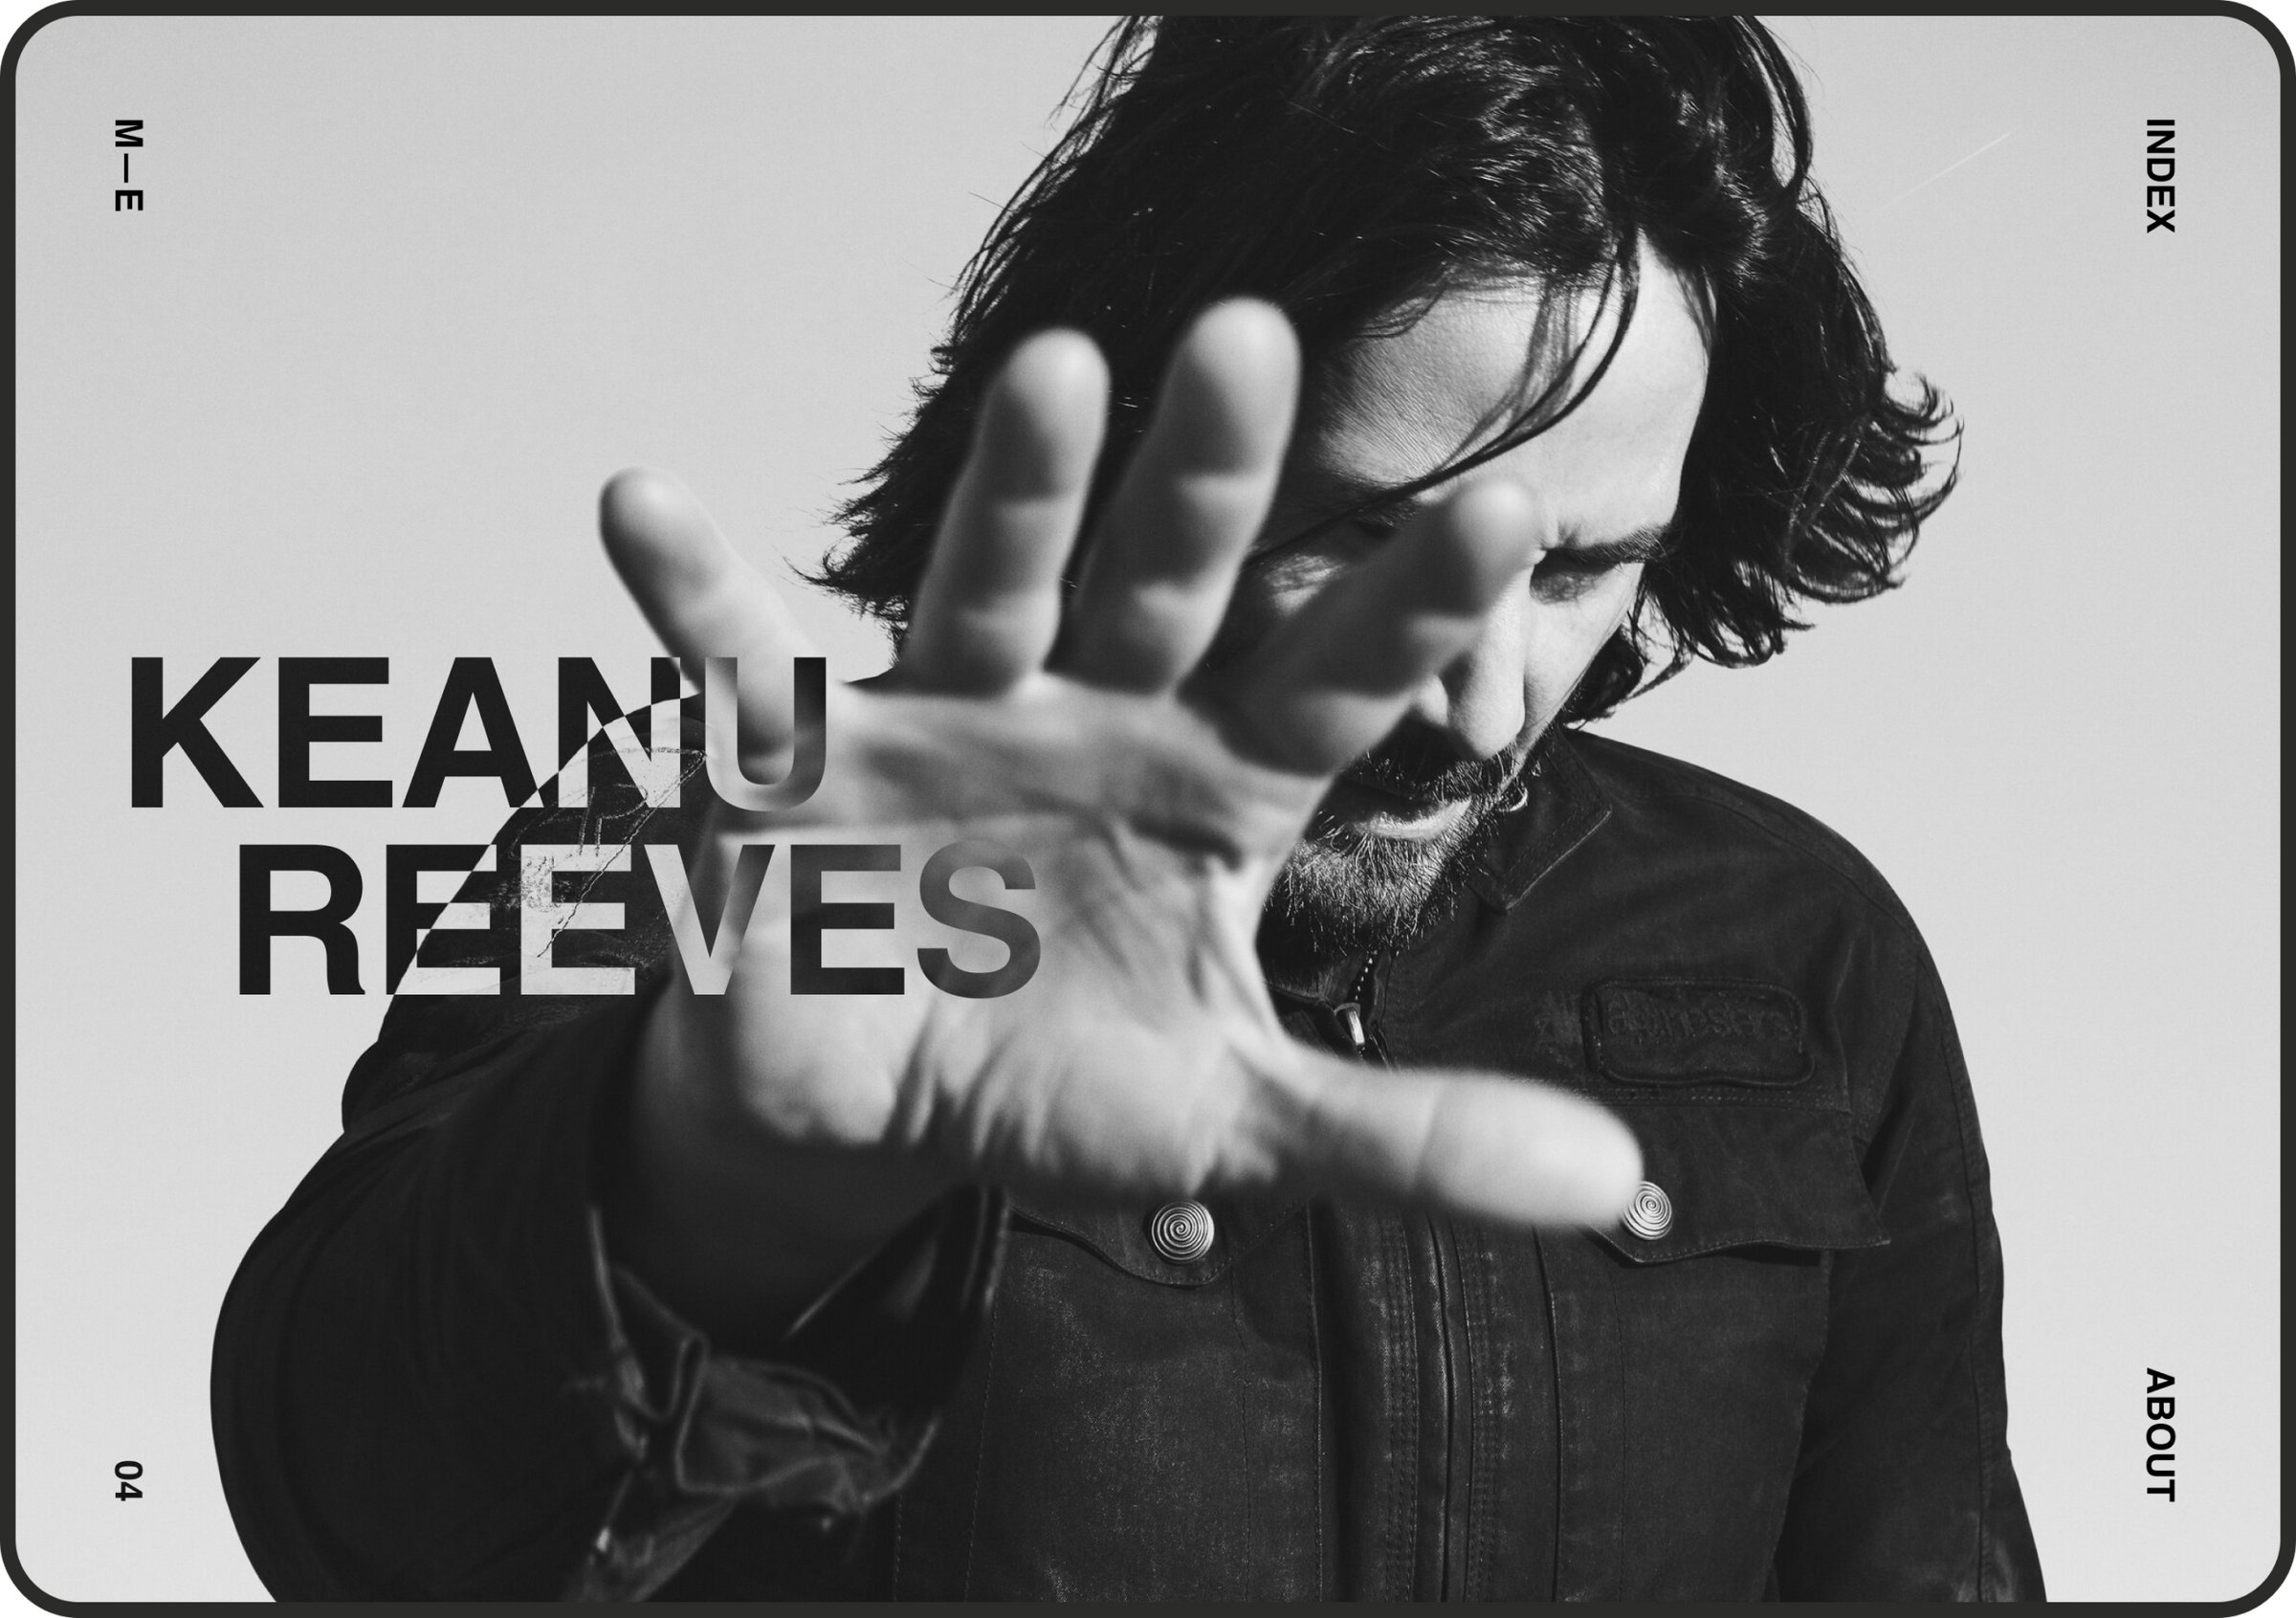 Marcus Erikkson Website design - Keanu Reeves page